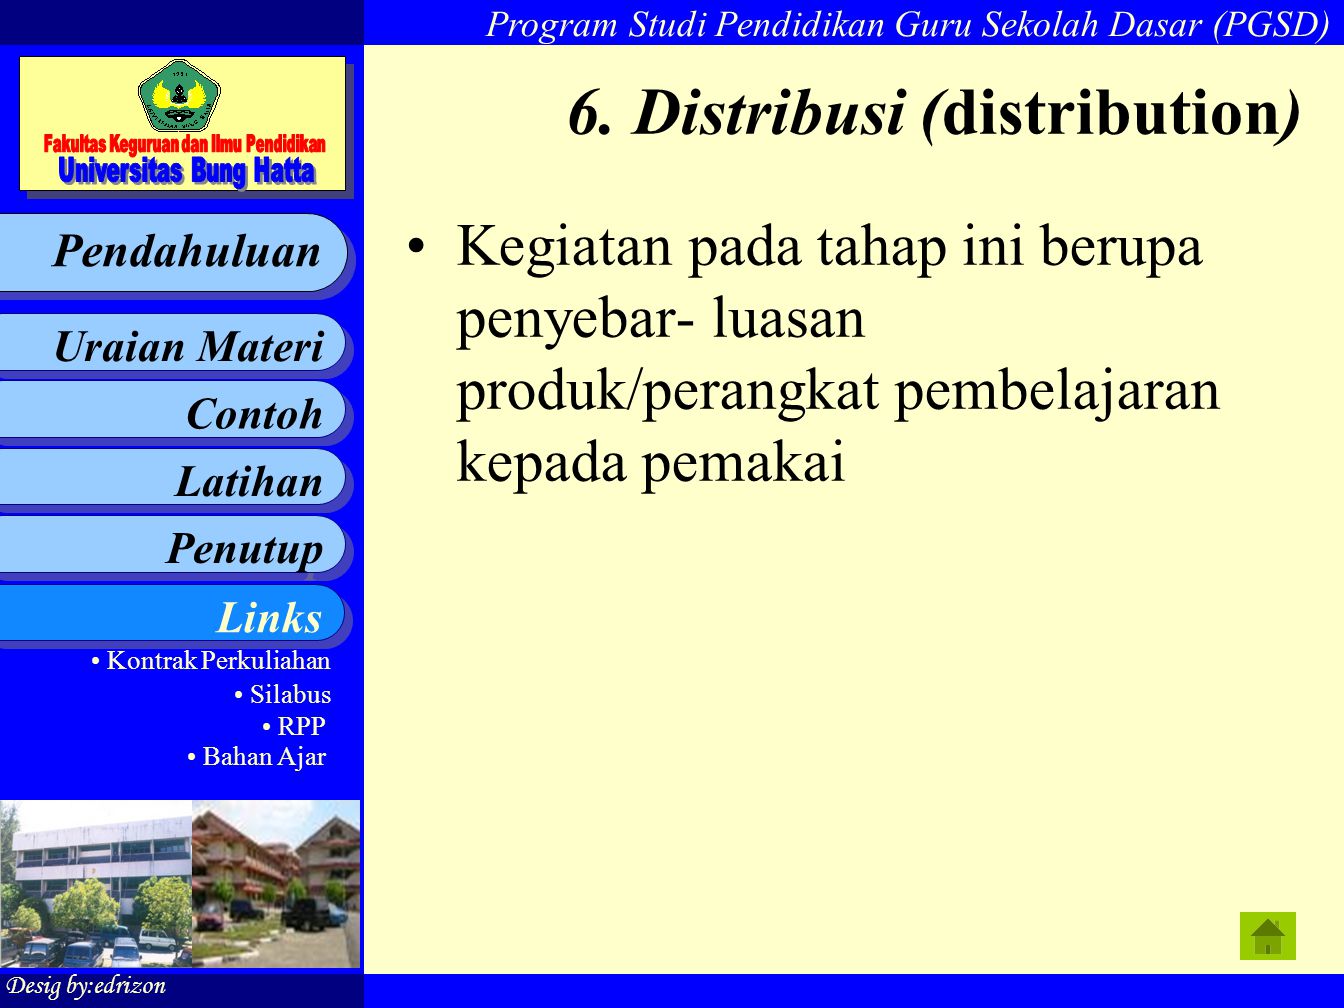 6. Distribusi (distribution)